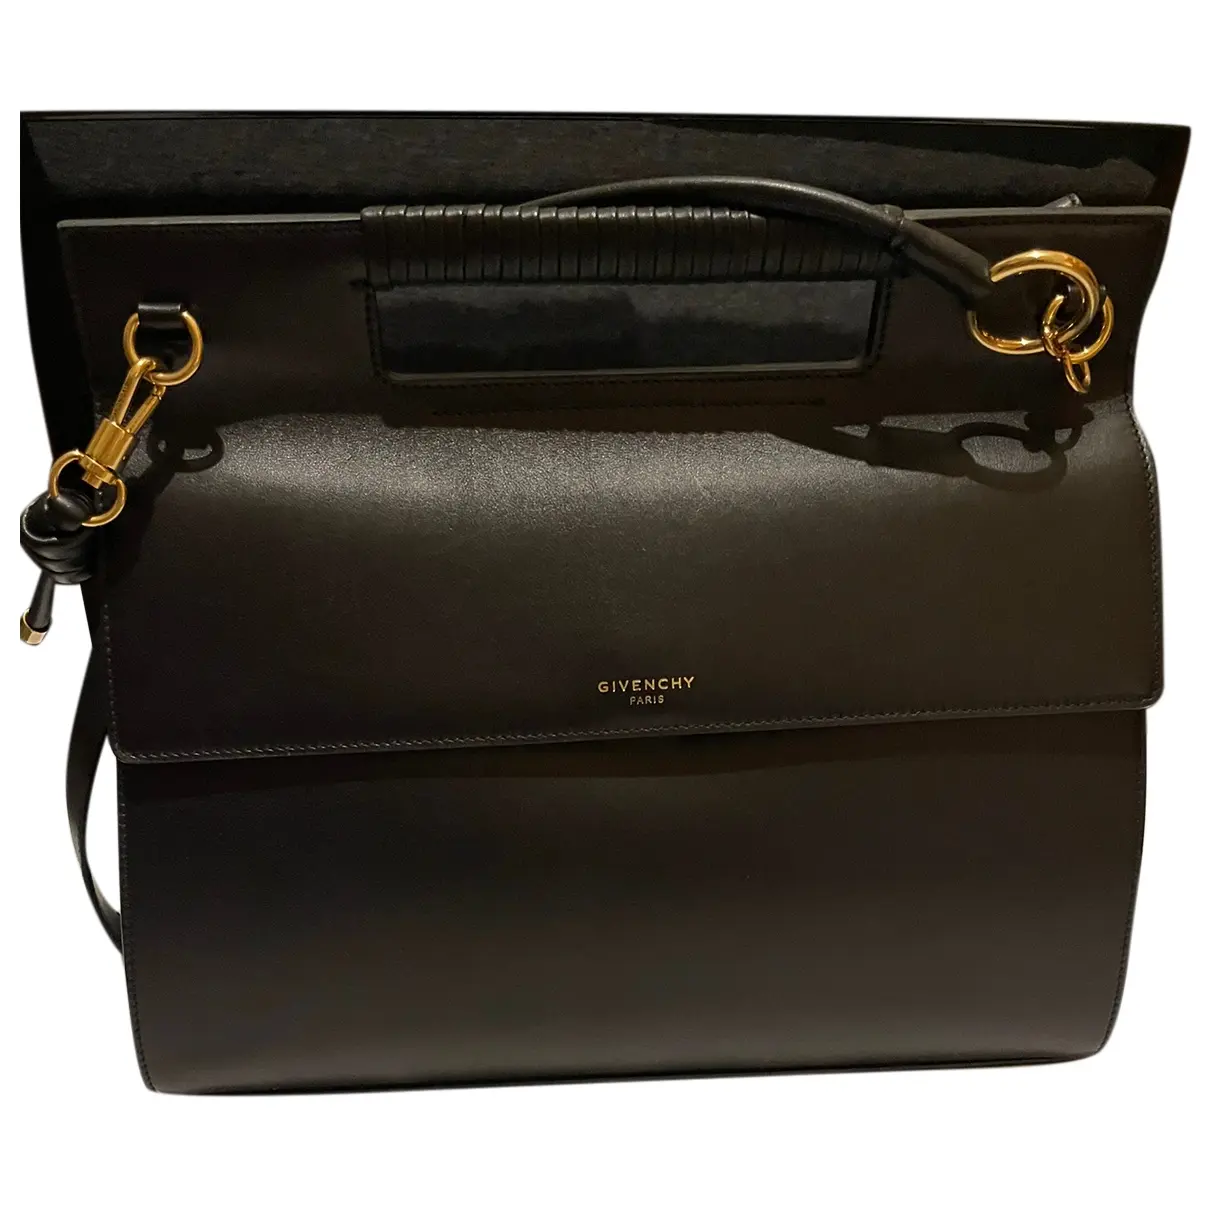 Whip leather handbag